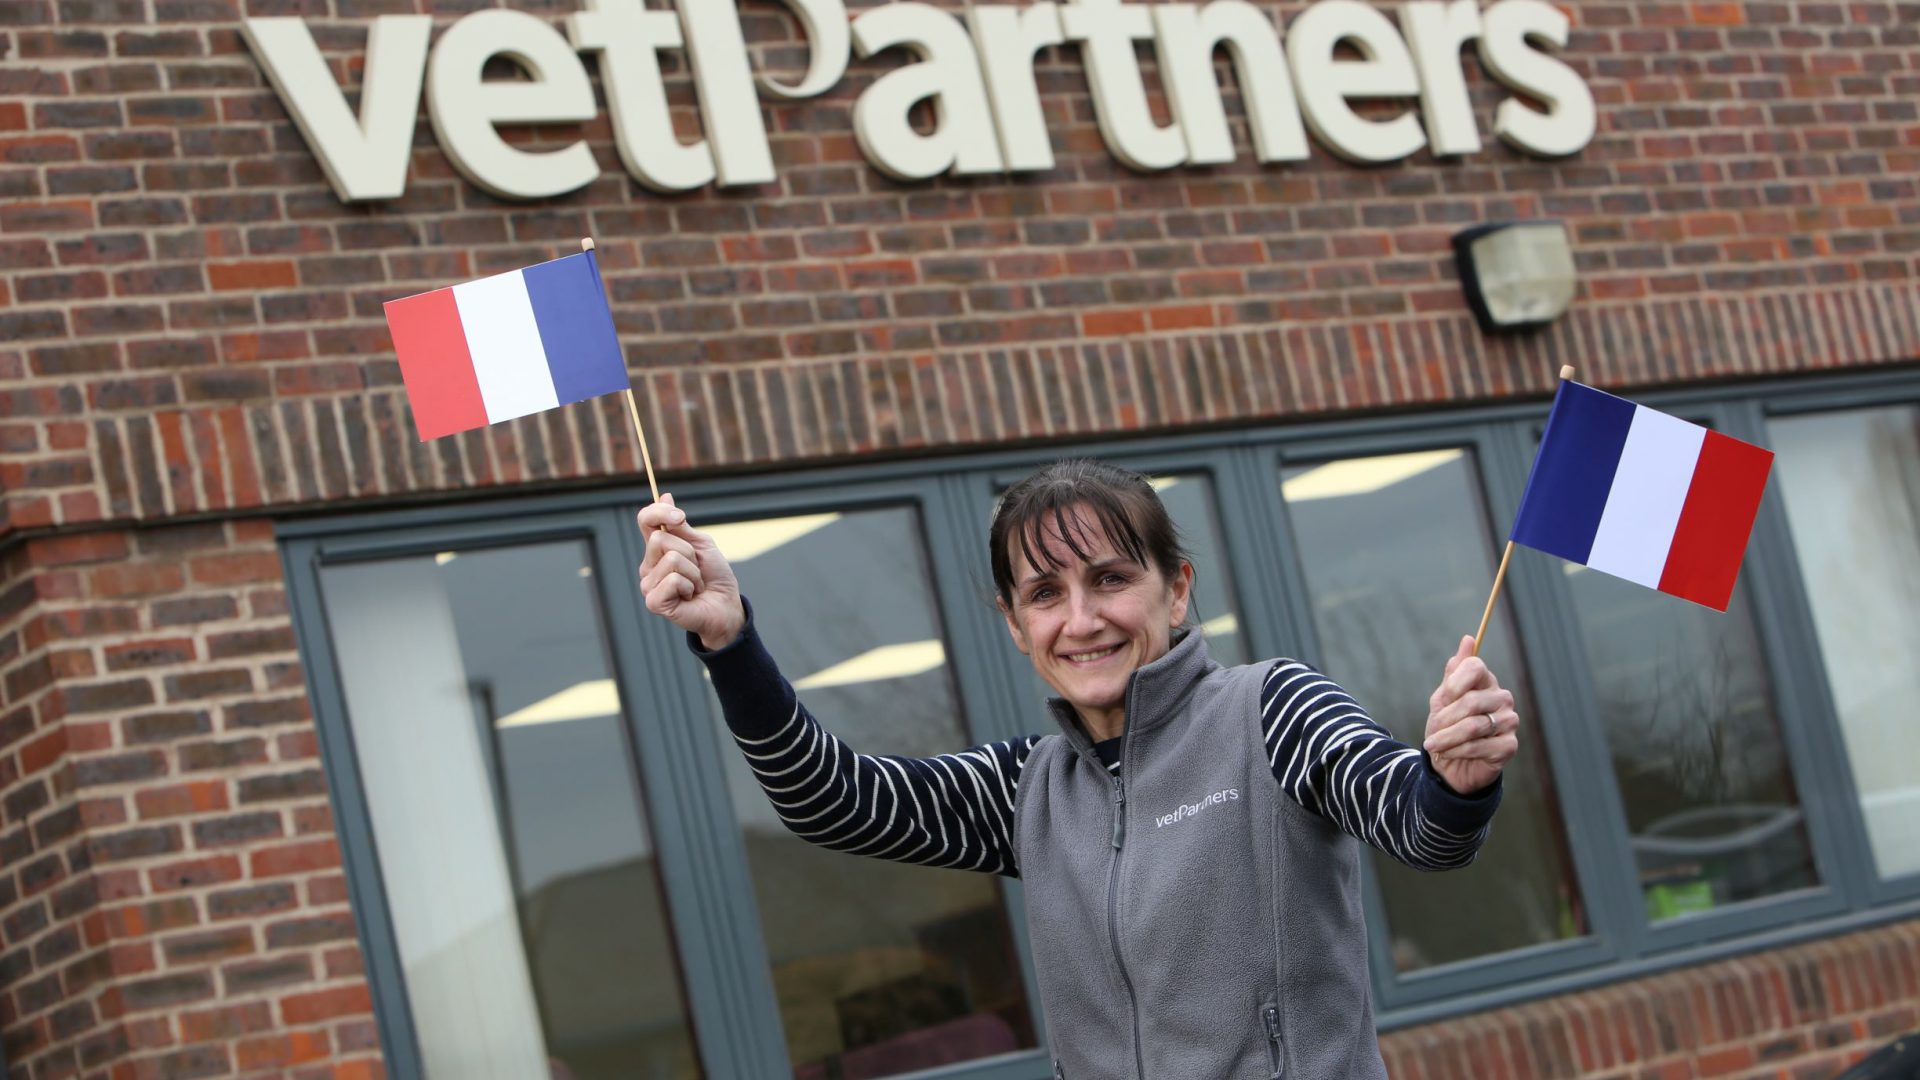 VetPartners says bonjour to France